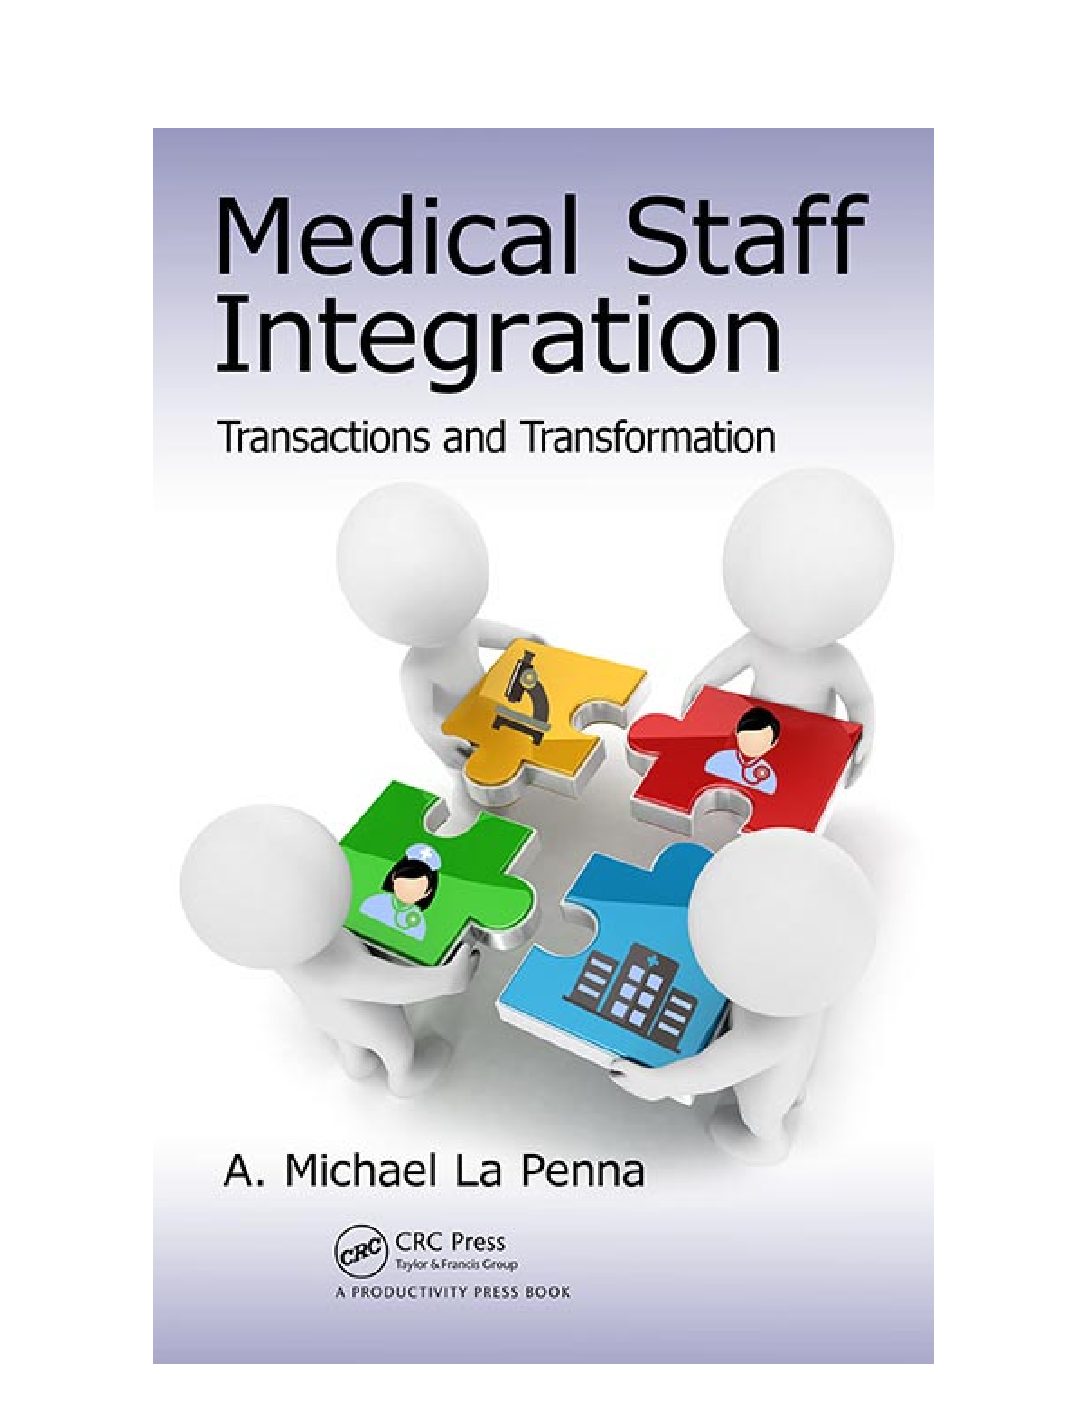 https://lapenna.com/wp-content/uploads/2022/04/Book-cover-Medical-Staff-Integration-pdf.jpg